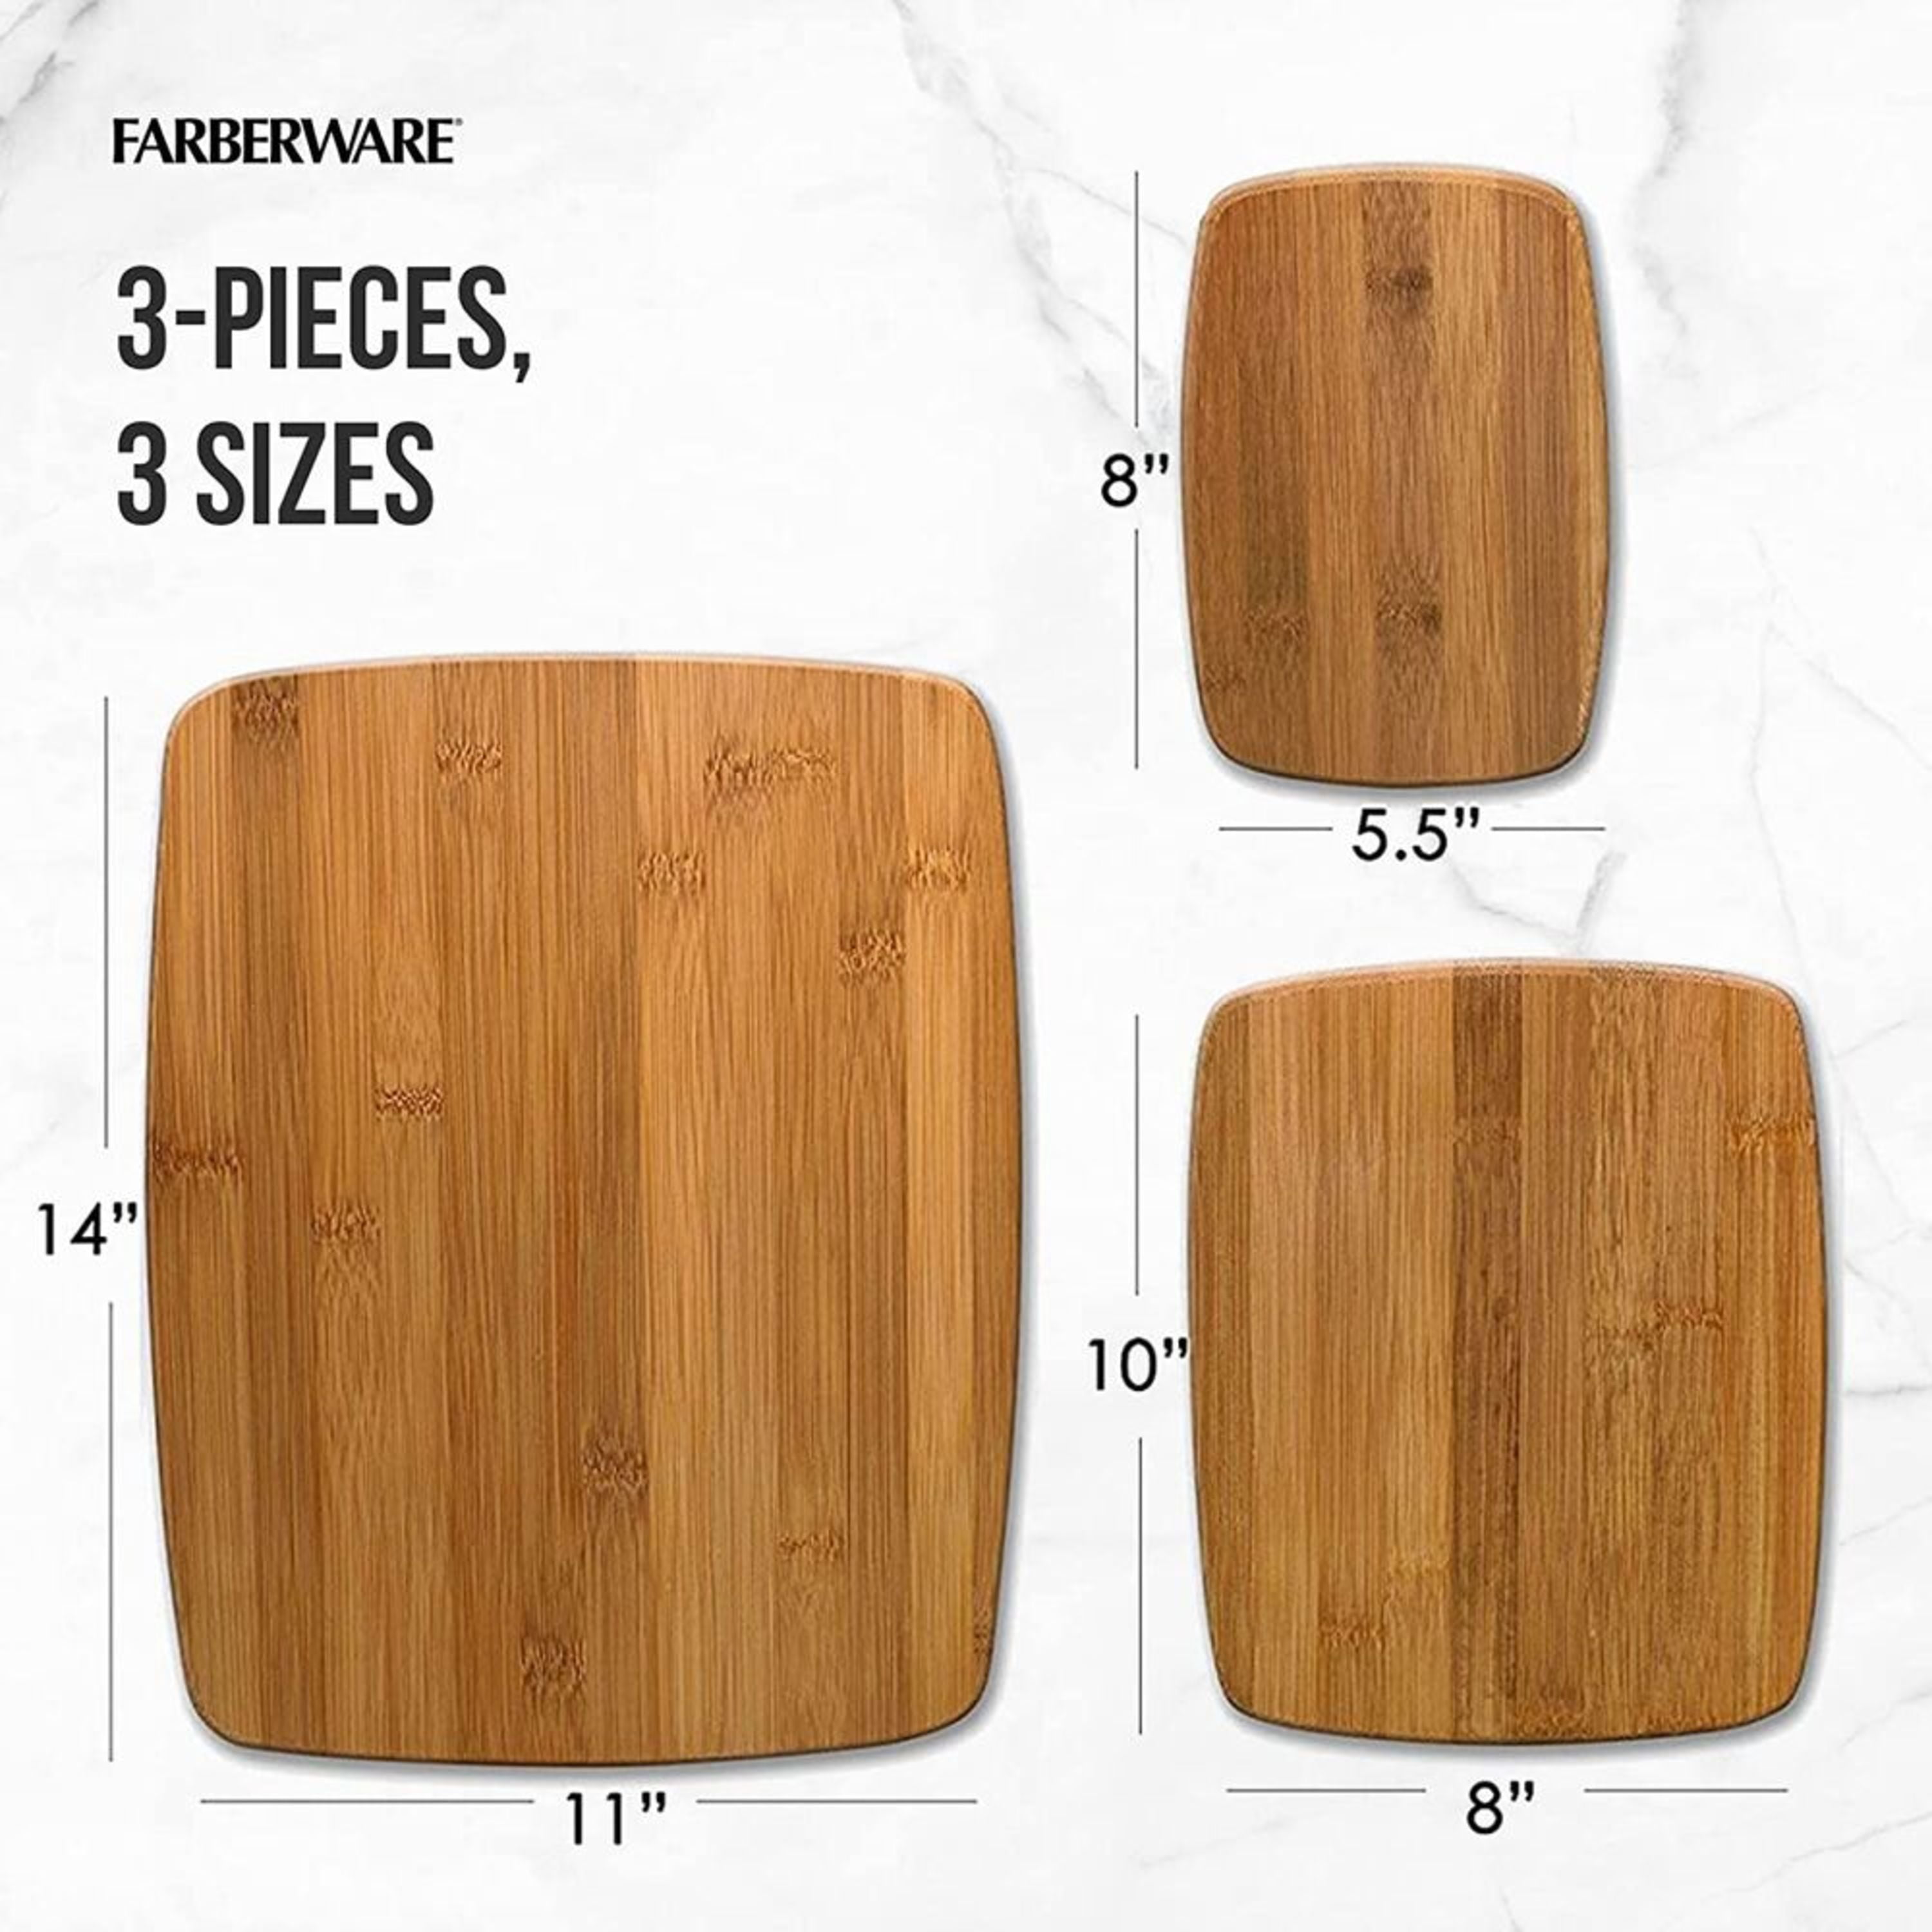 Farberware 3-Piece Cutting Board Set